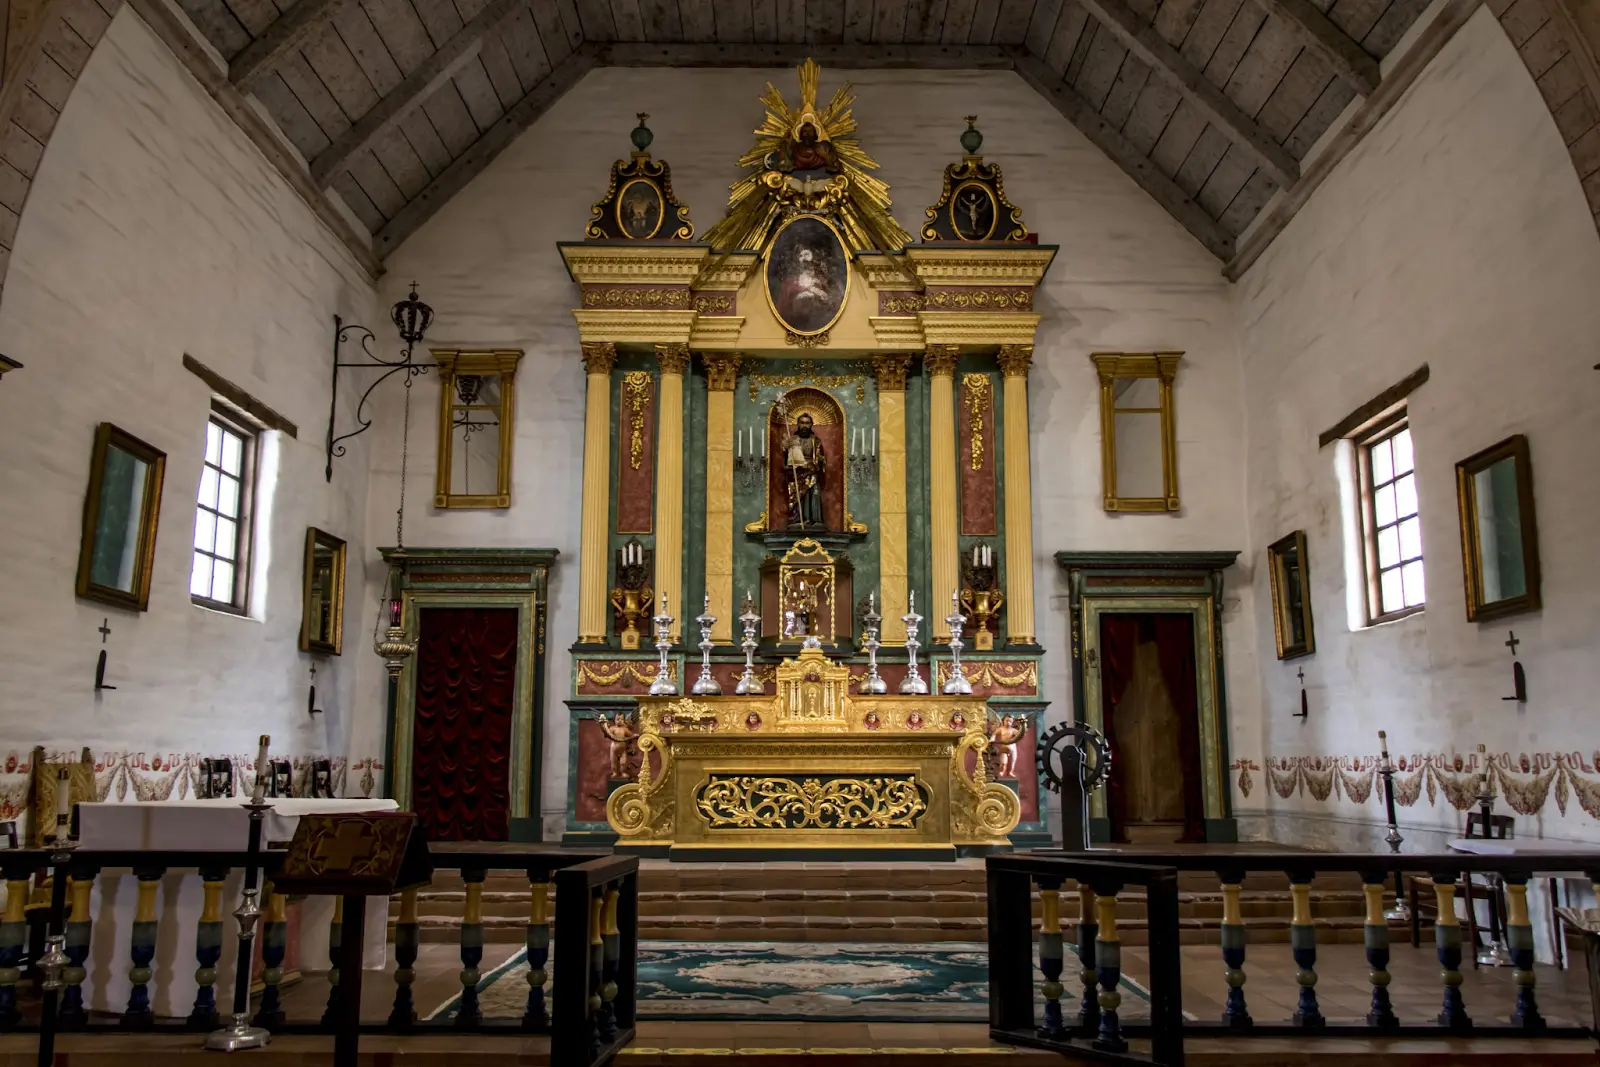 Mission San José